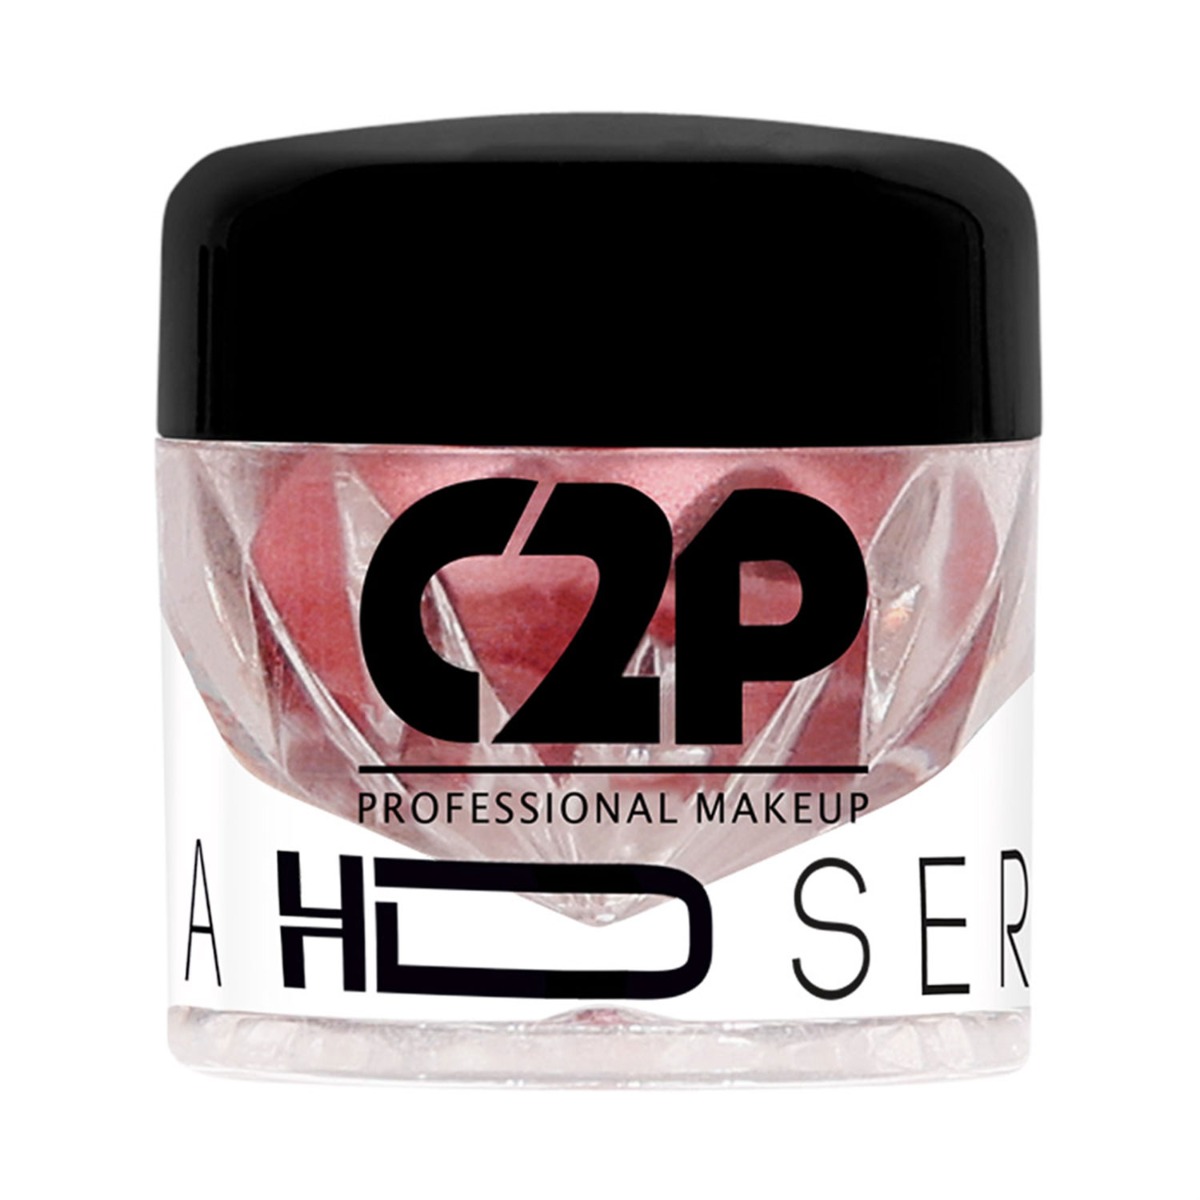 C2P Pro HD Loose Precious Pigments - Hey Girl 76, 2gm